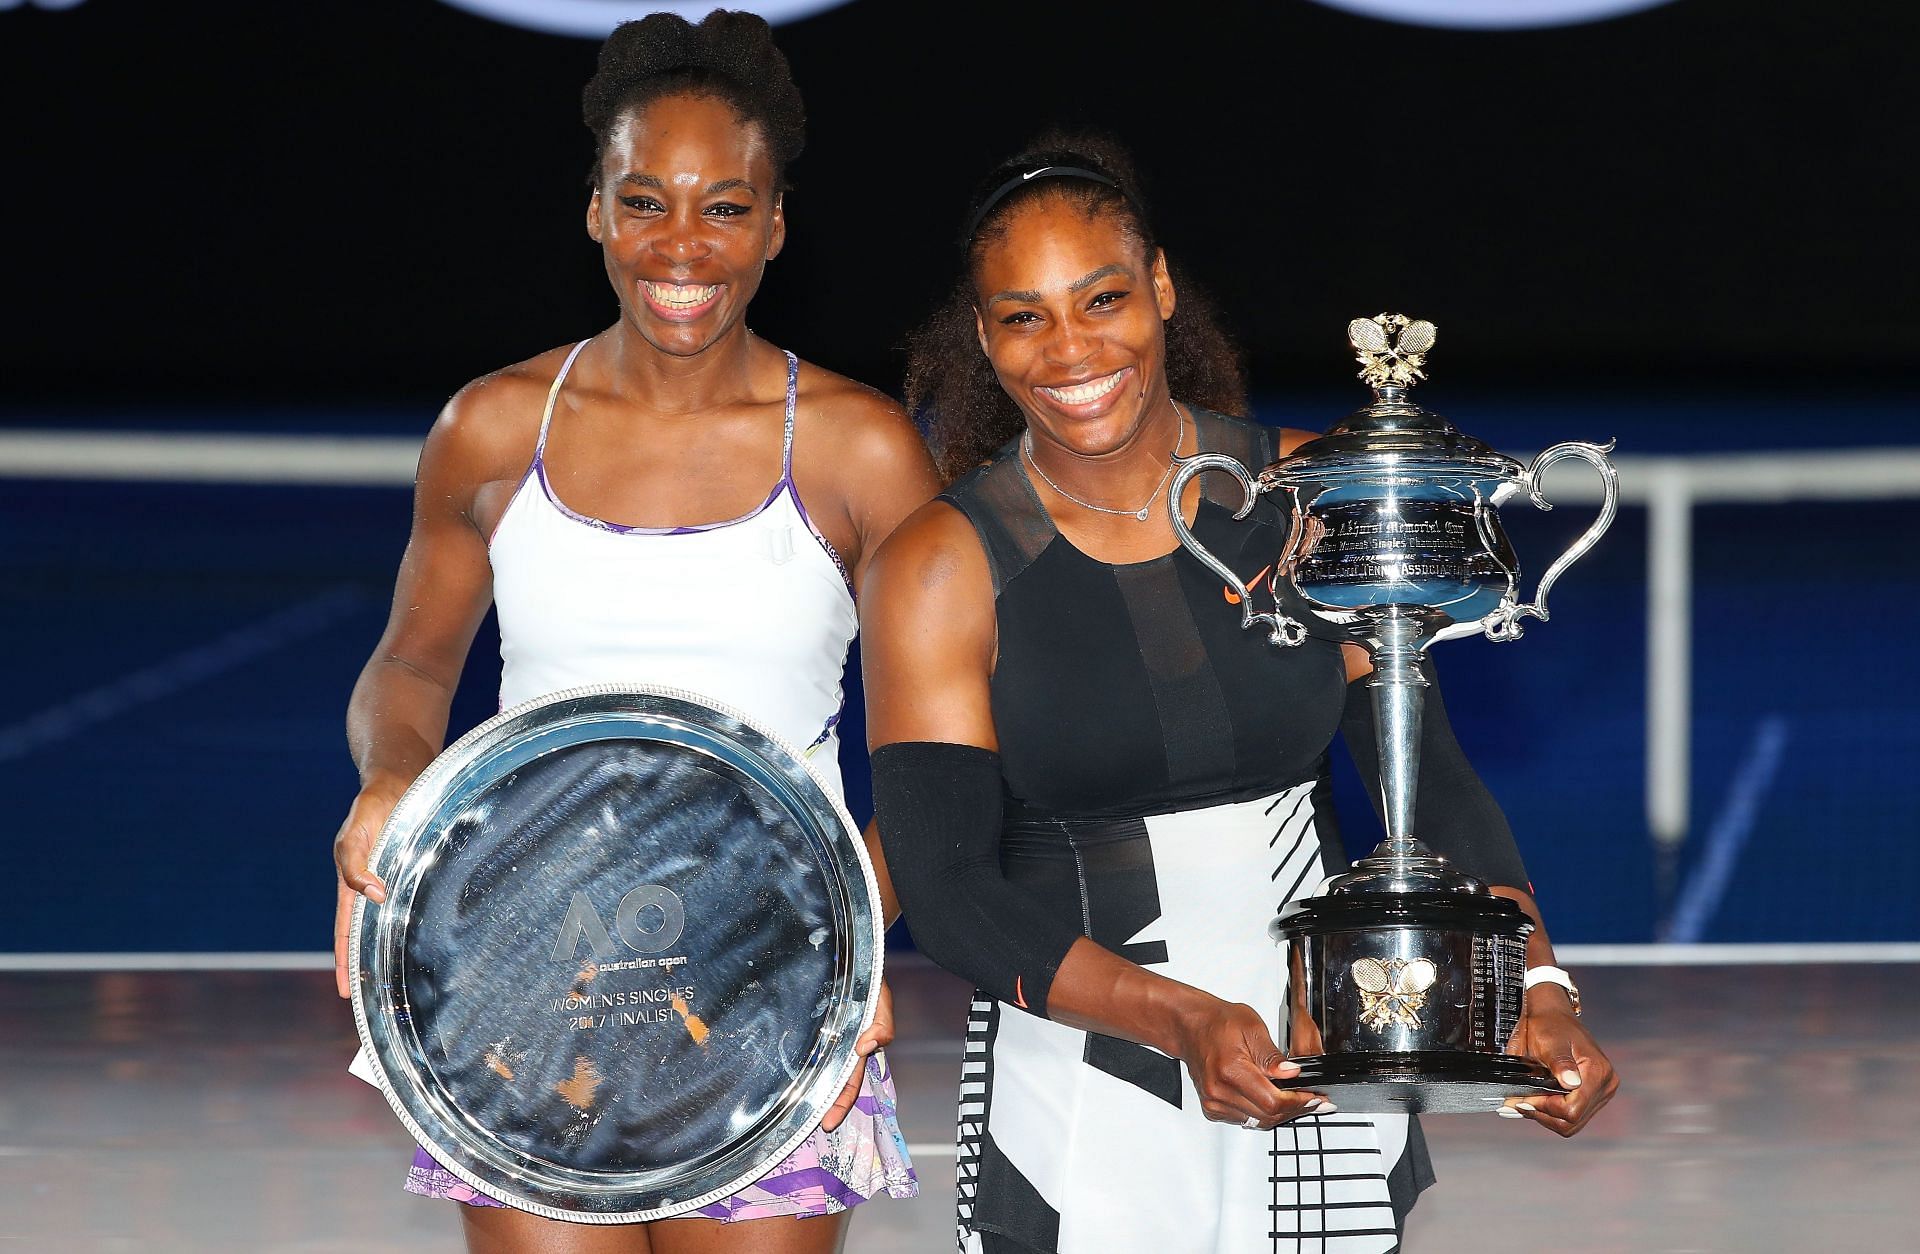 Serena Williams has beaten Venus Williams in 7 Grand Slam finals